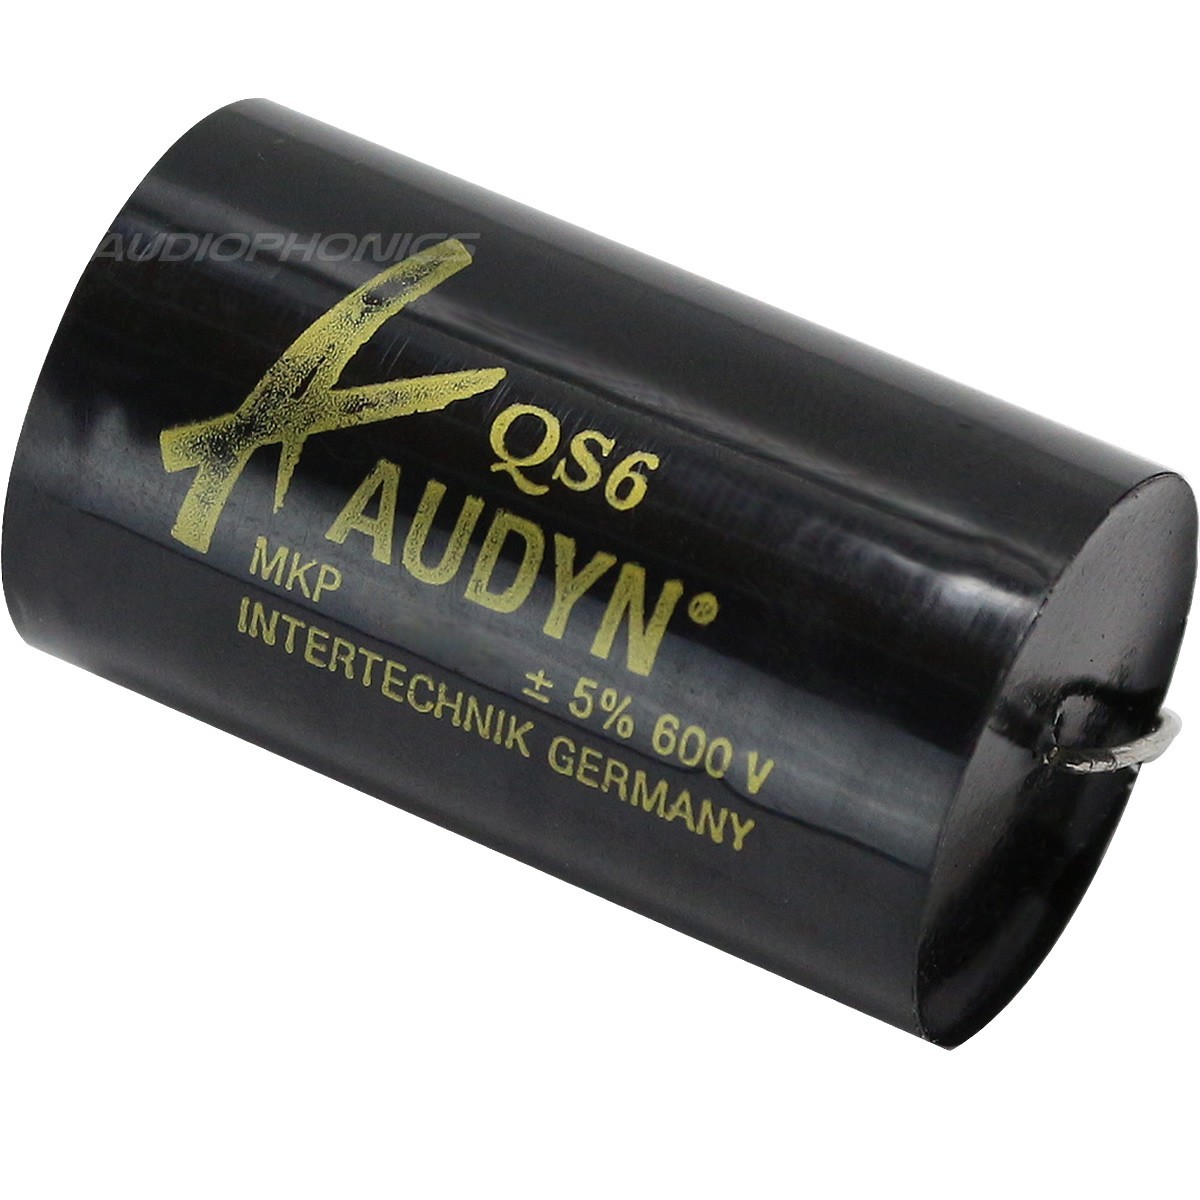 AUDYN CAP QS6 Condensateur MKP 600V 0.68µF